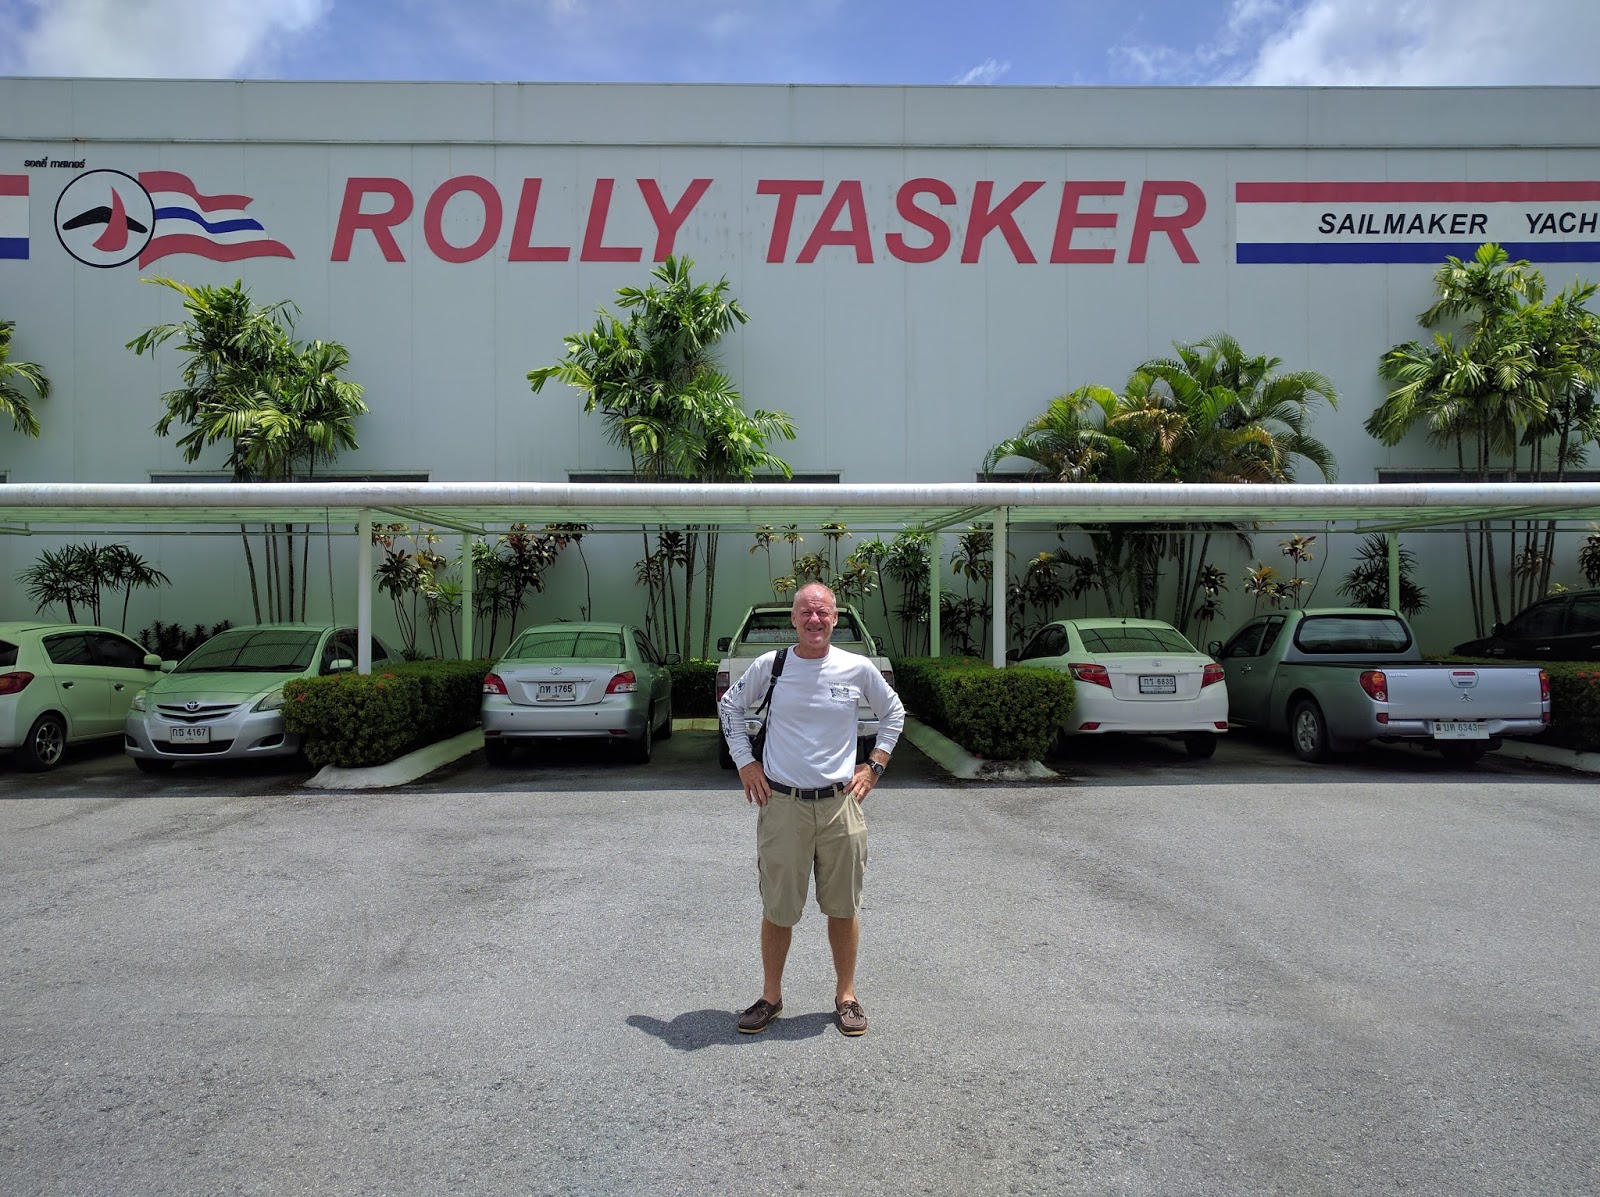 vessel: Rolly Tasker Phuket, Thailand